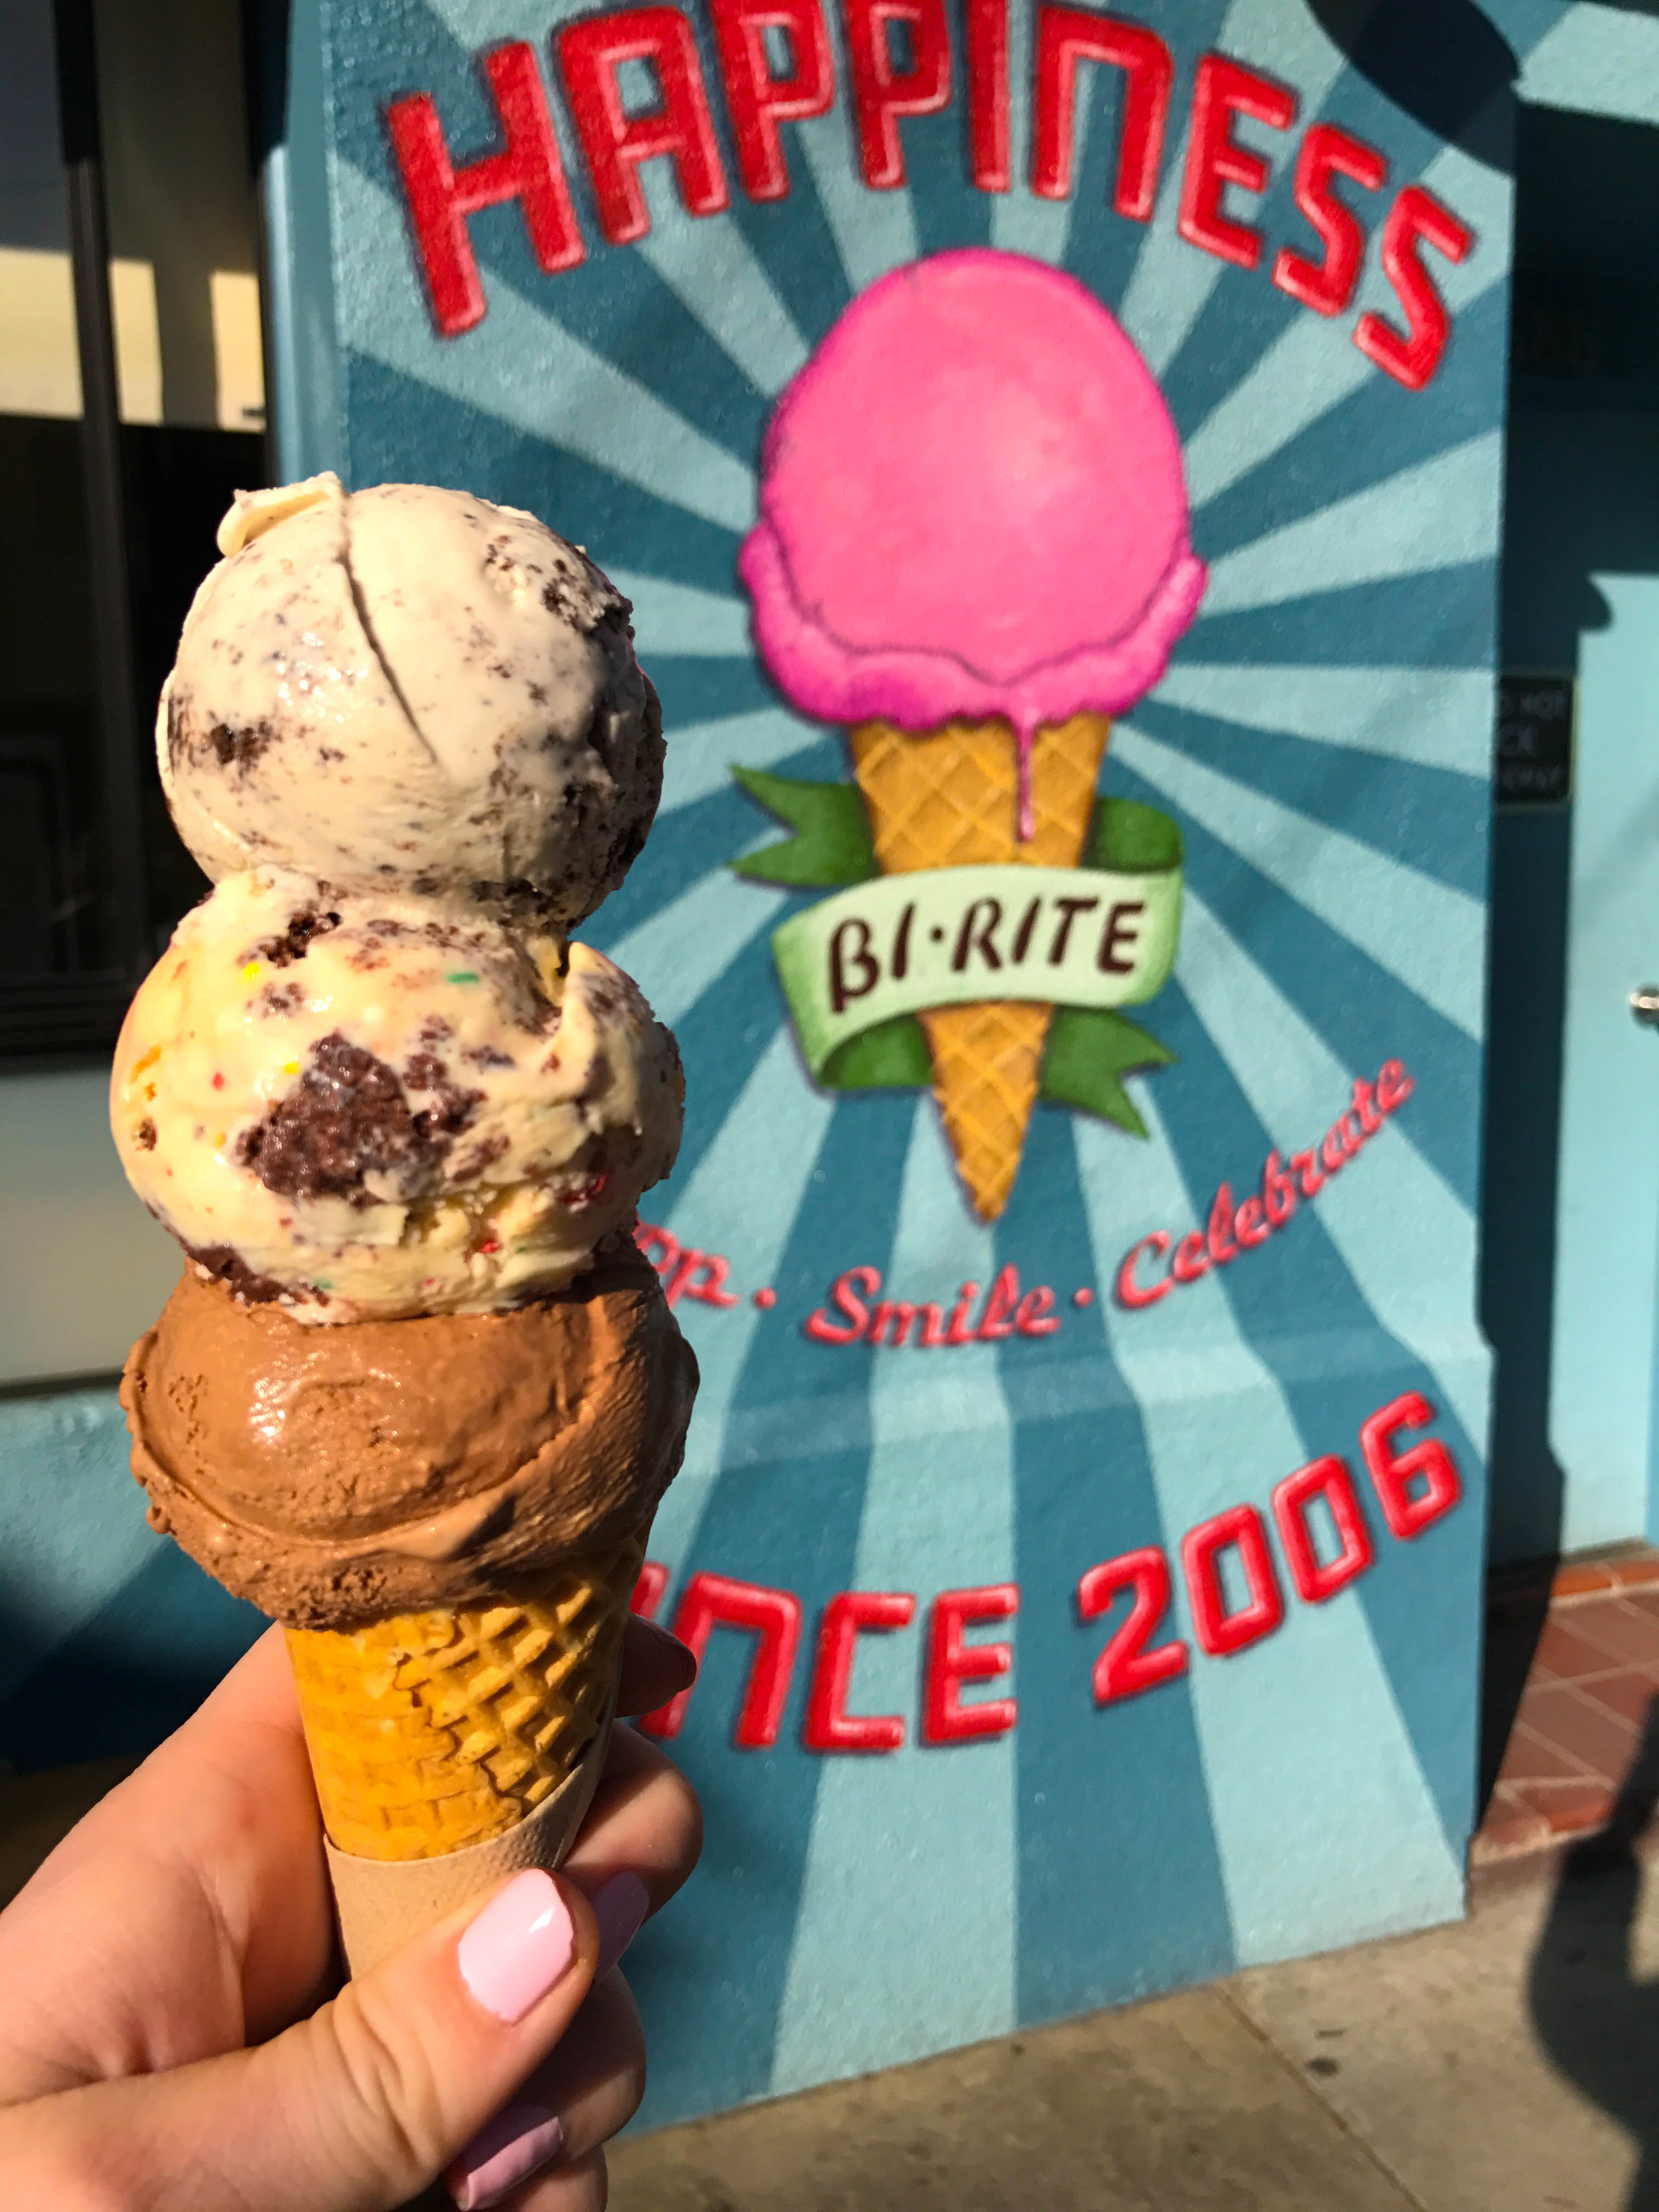 San Francisco Best Ice Cream - Bi-rite Creamery